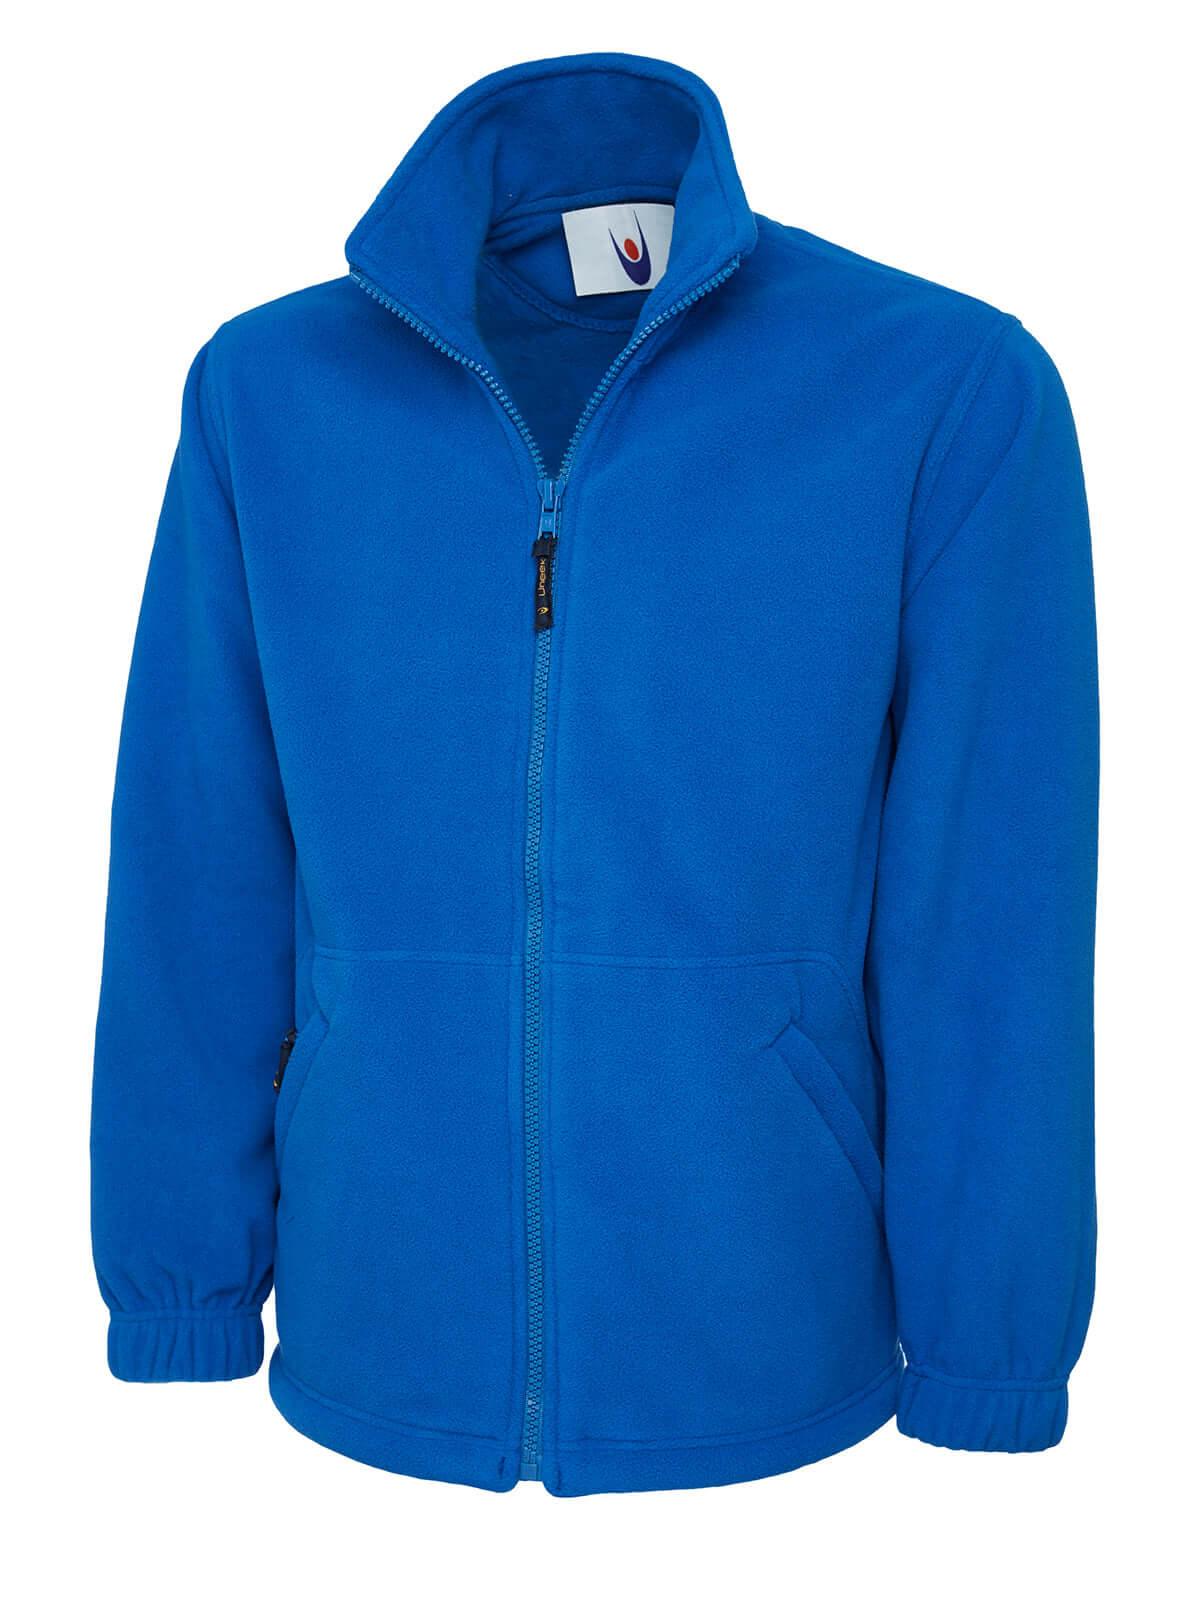 Pegasus Uniform Premium Full Zip Micro Fleece Jacket - Royal Blue